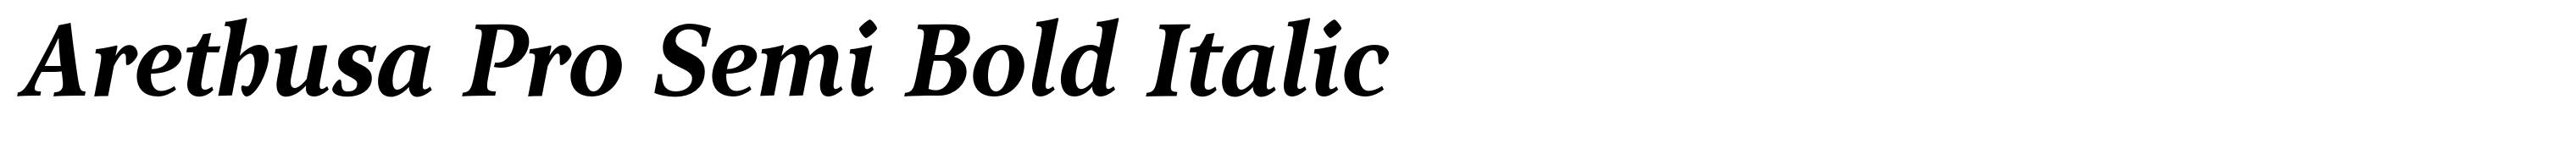 Arethusa Pro Semi Bold Italic